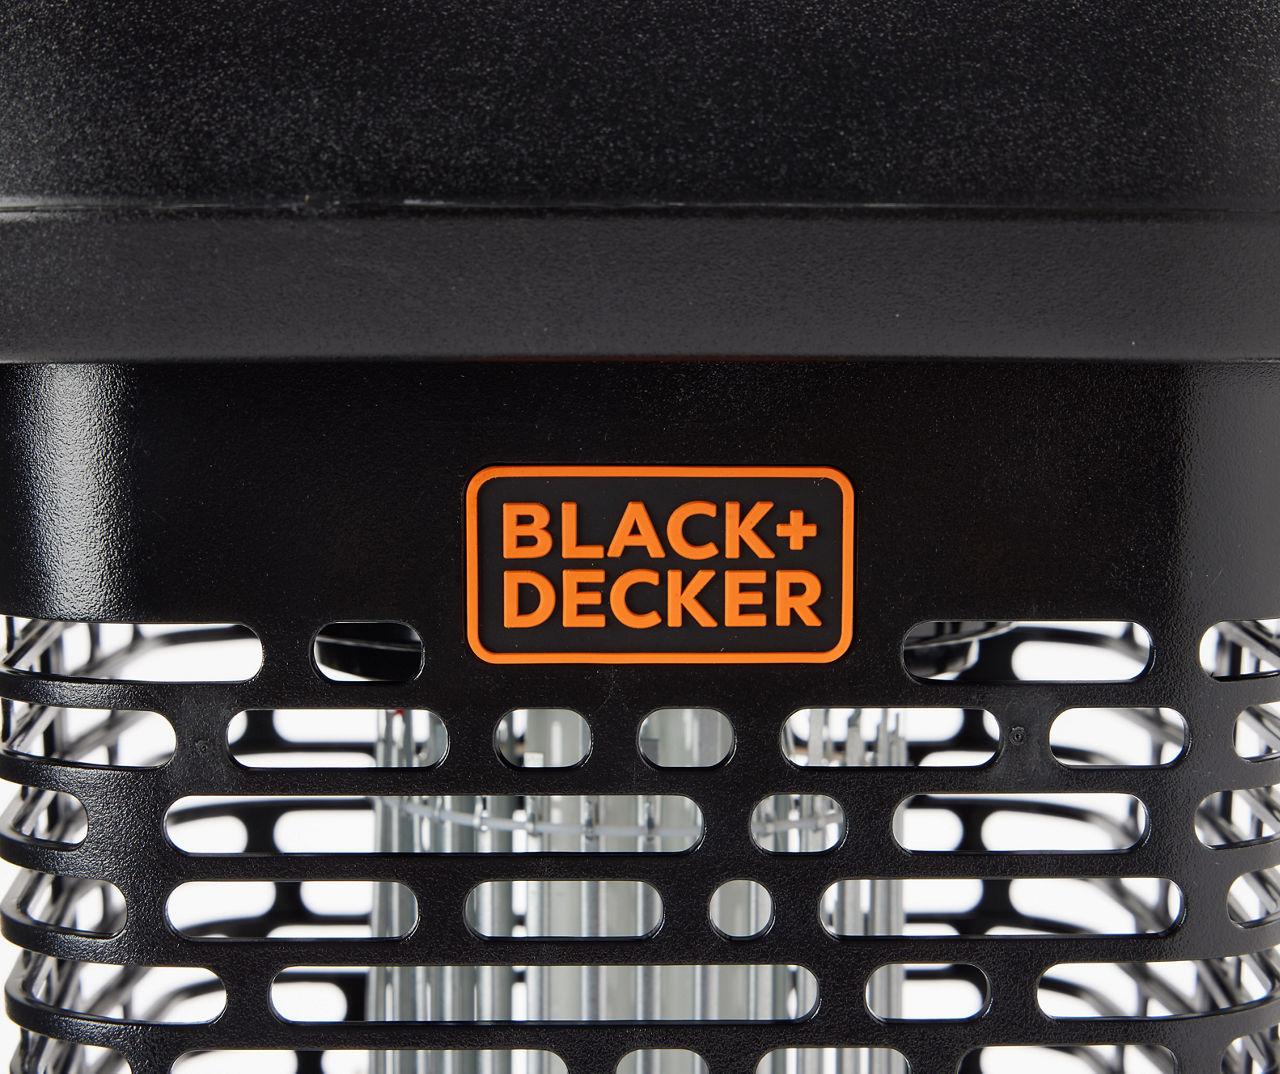 Black + Decker Black High-Voltage Electric Outdoor Bug Zapper